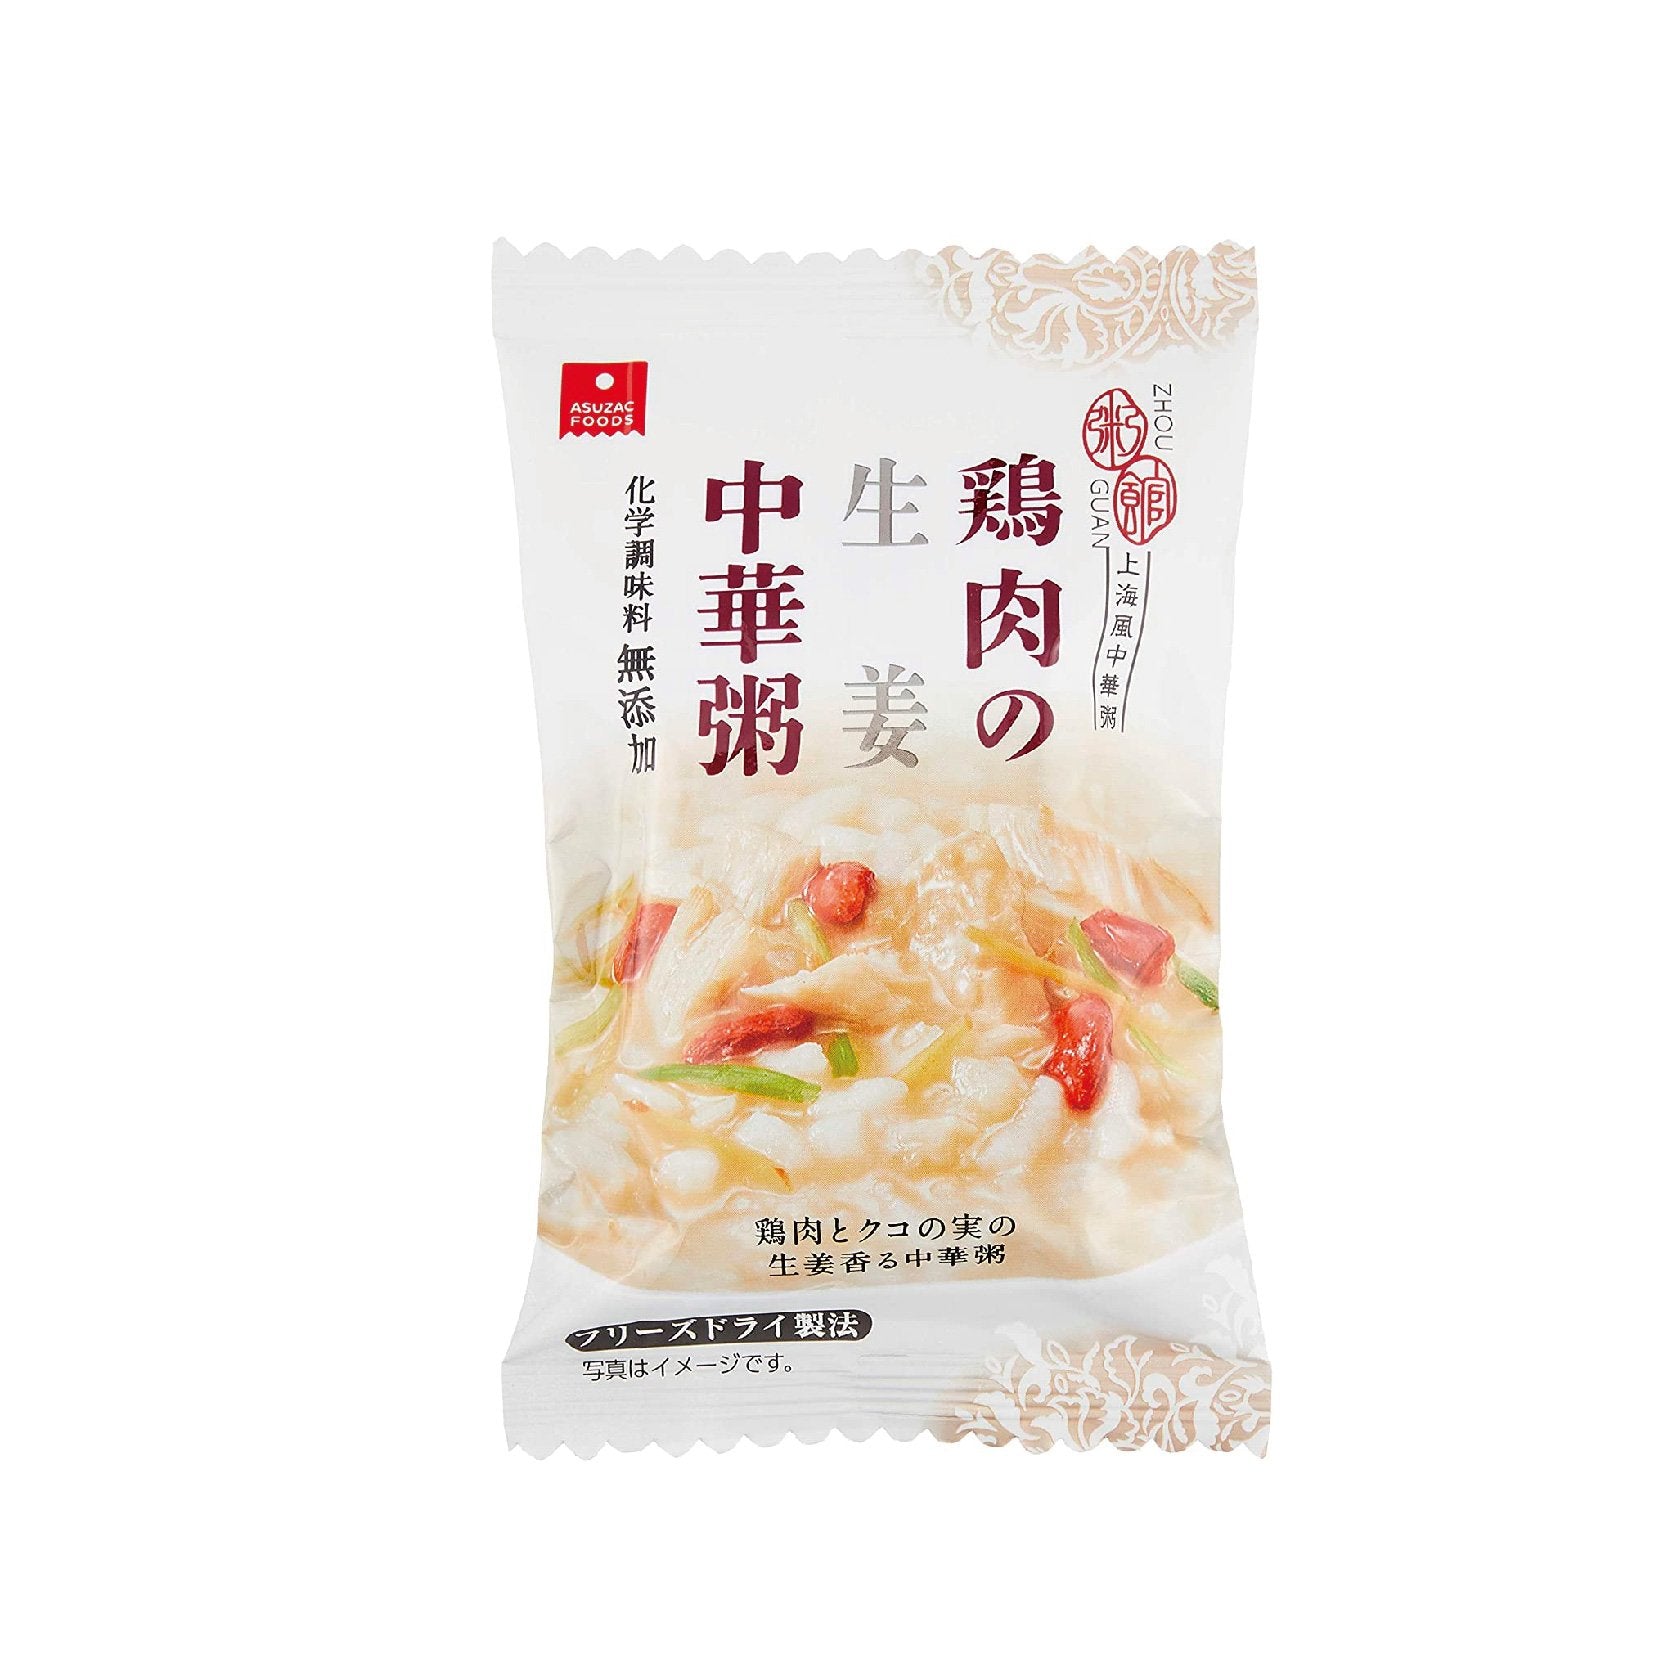 Asuzac Foods 即食中式鷄粥 [16.6克]